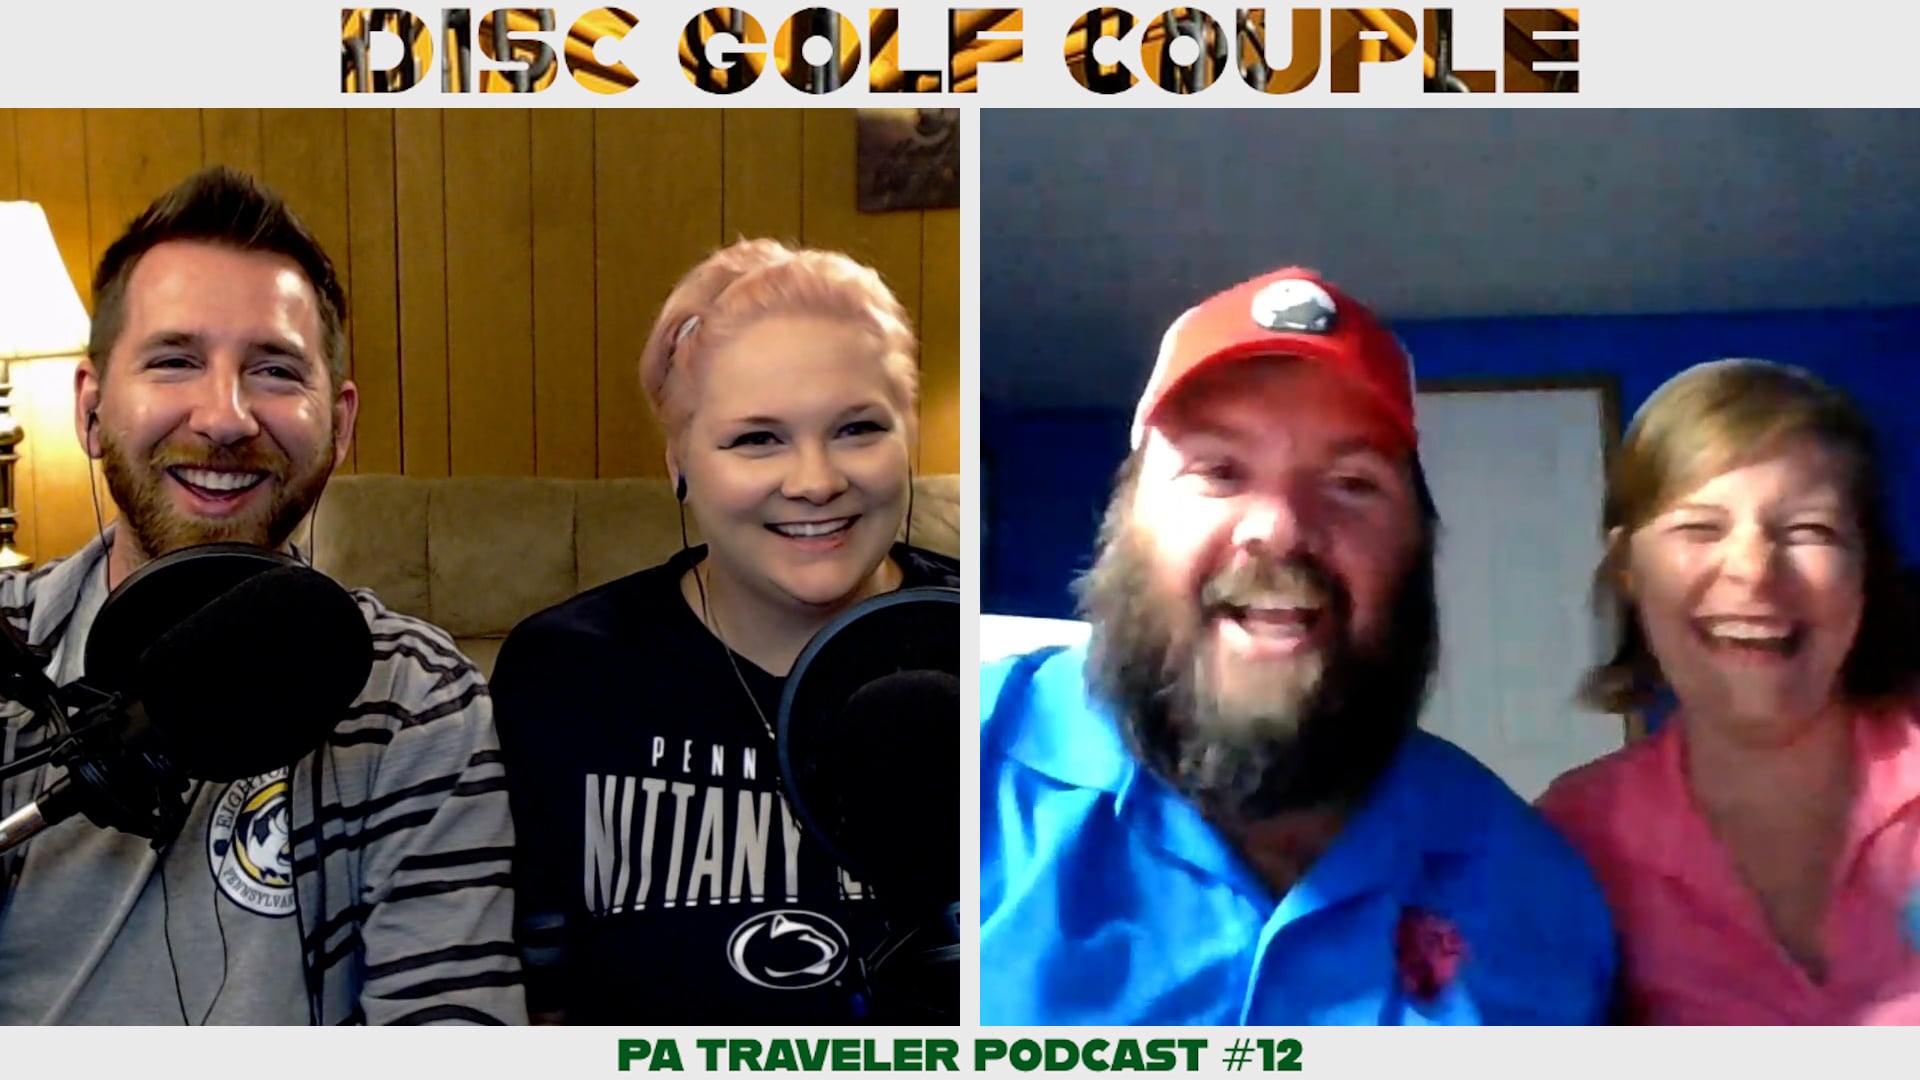 PA Traveler Podcast | Episode 12 - Disc Golf Couple